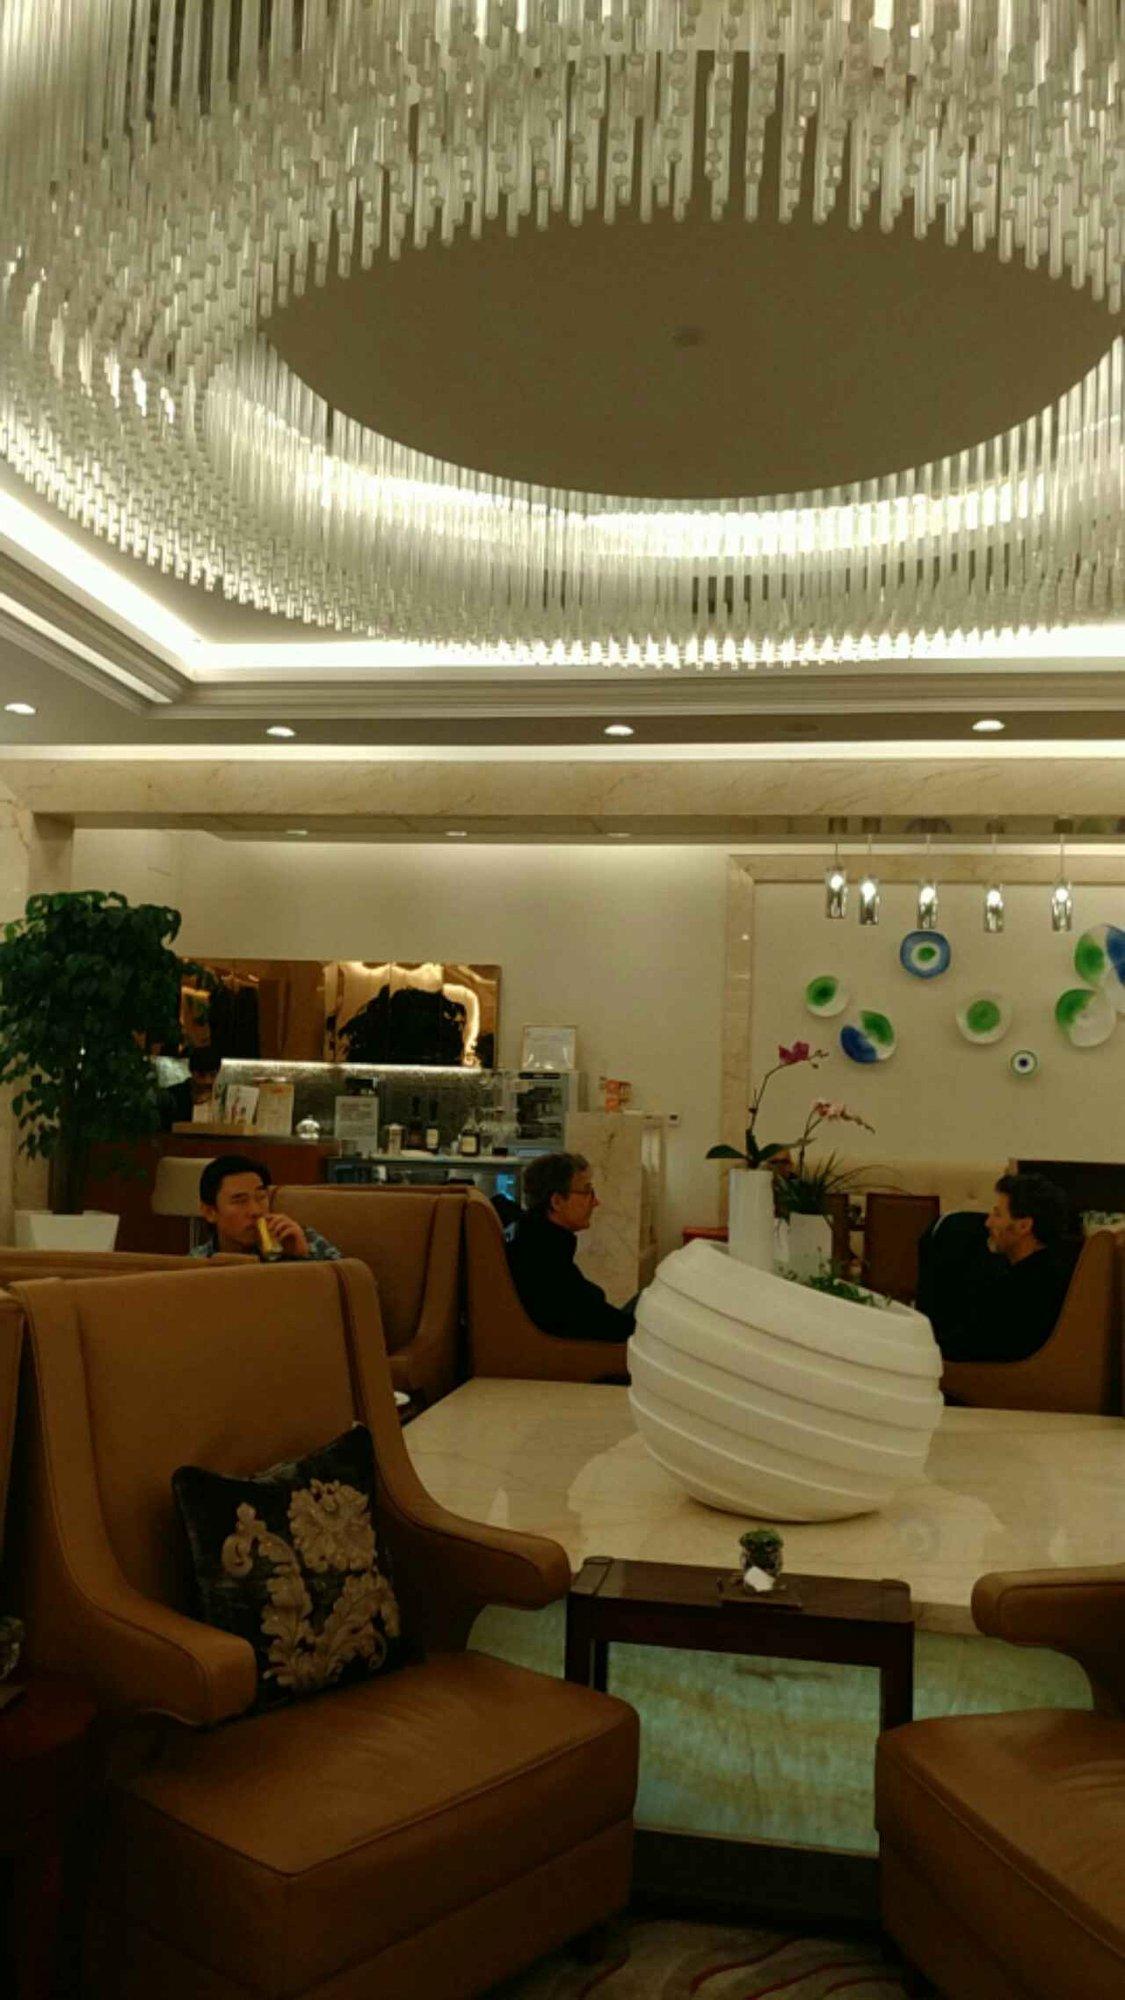 Shenzhen Airlines International King Lounge image 1 of 2